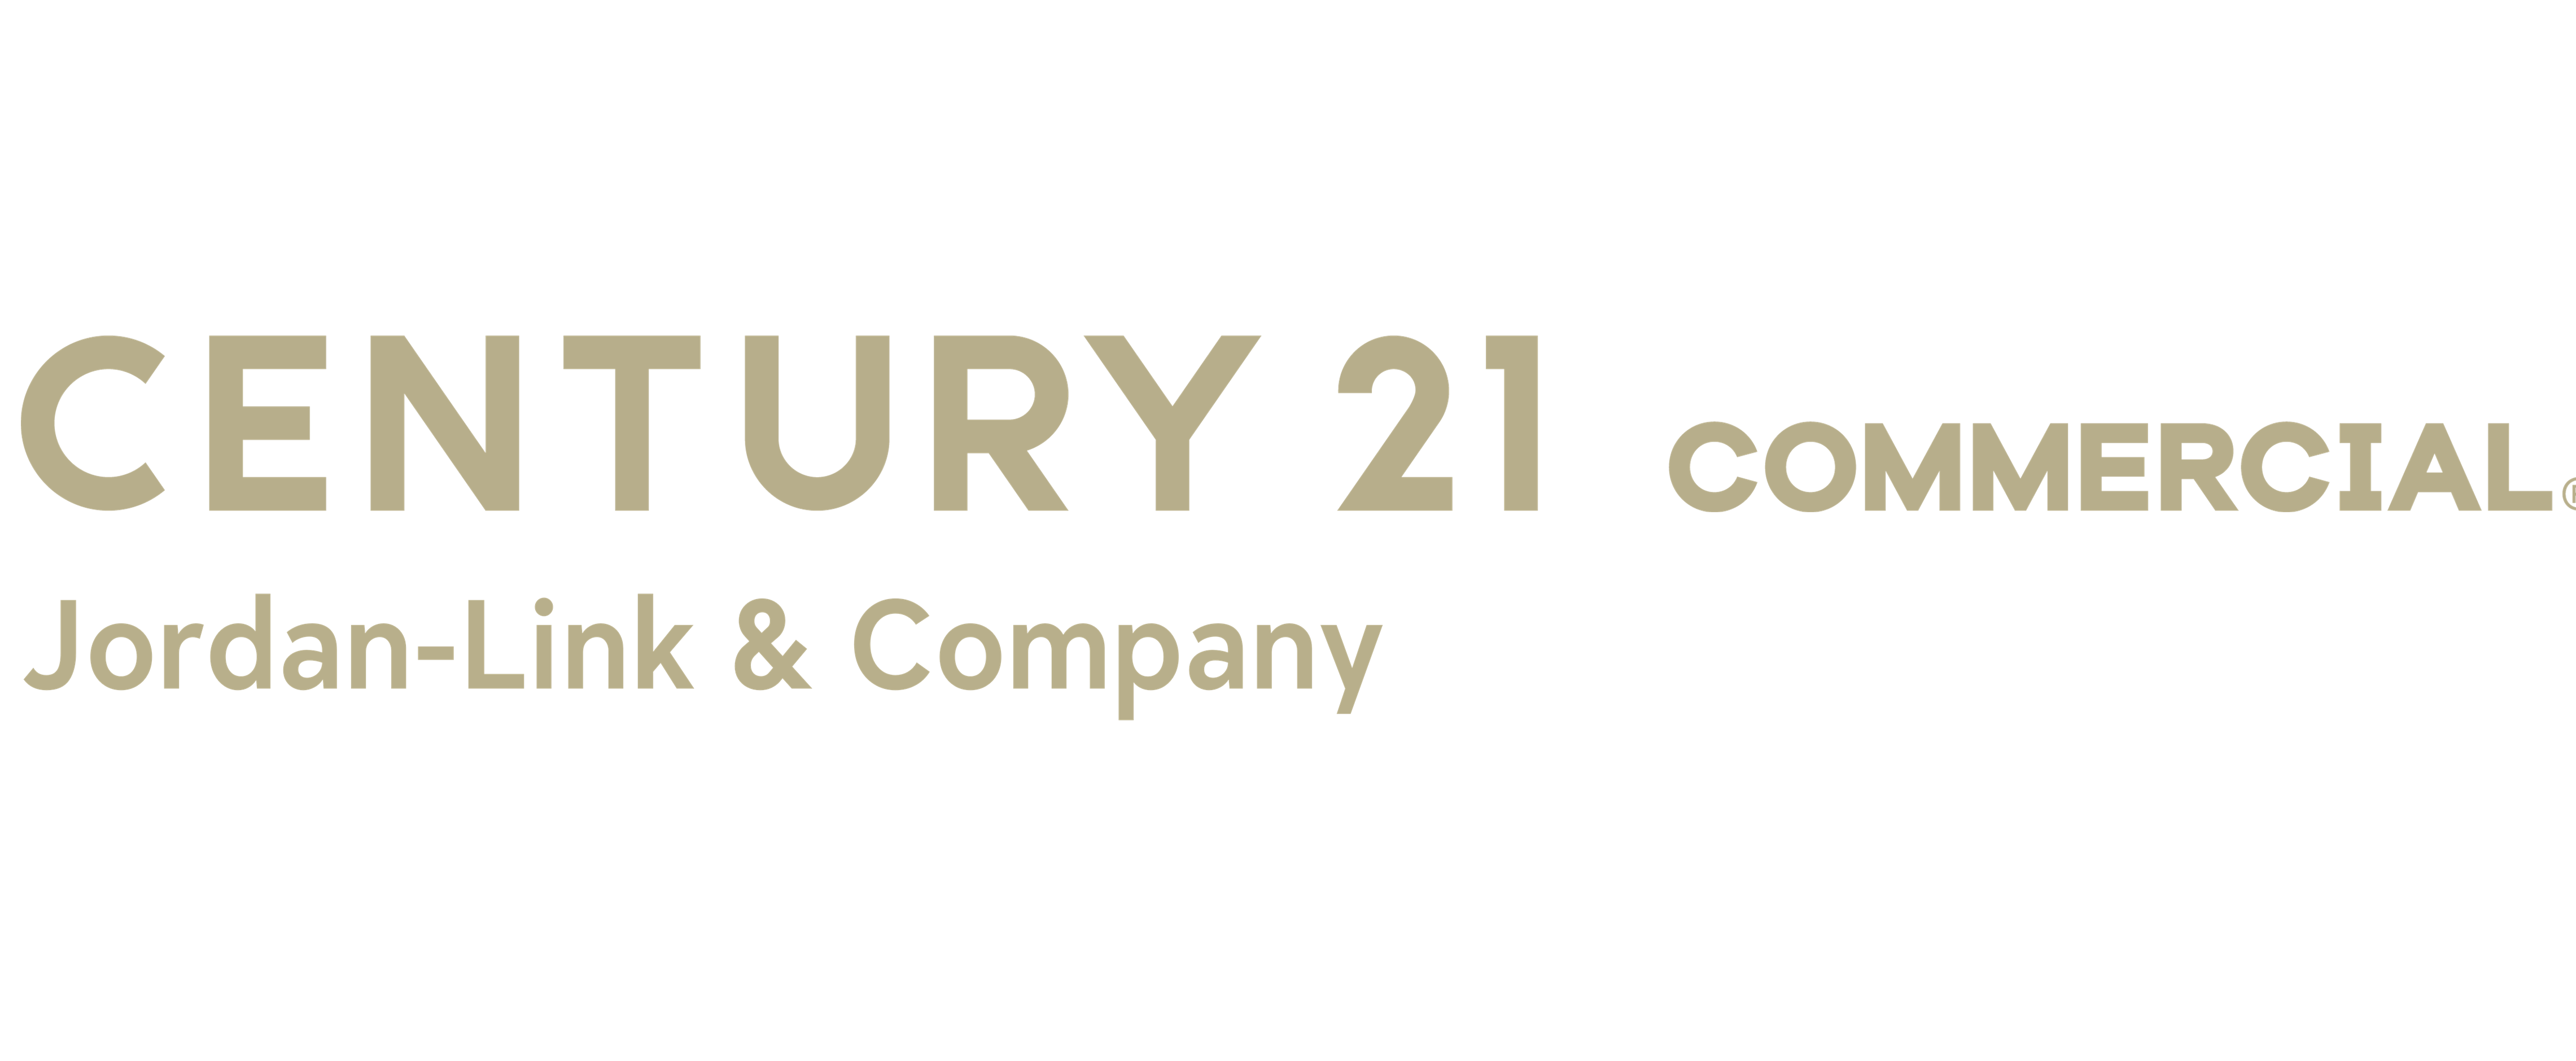 image of the commercial real estate logo for Century 21 Jordan Link